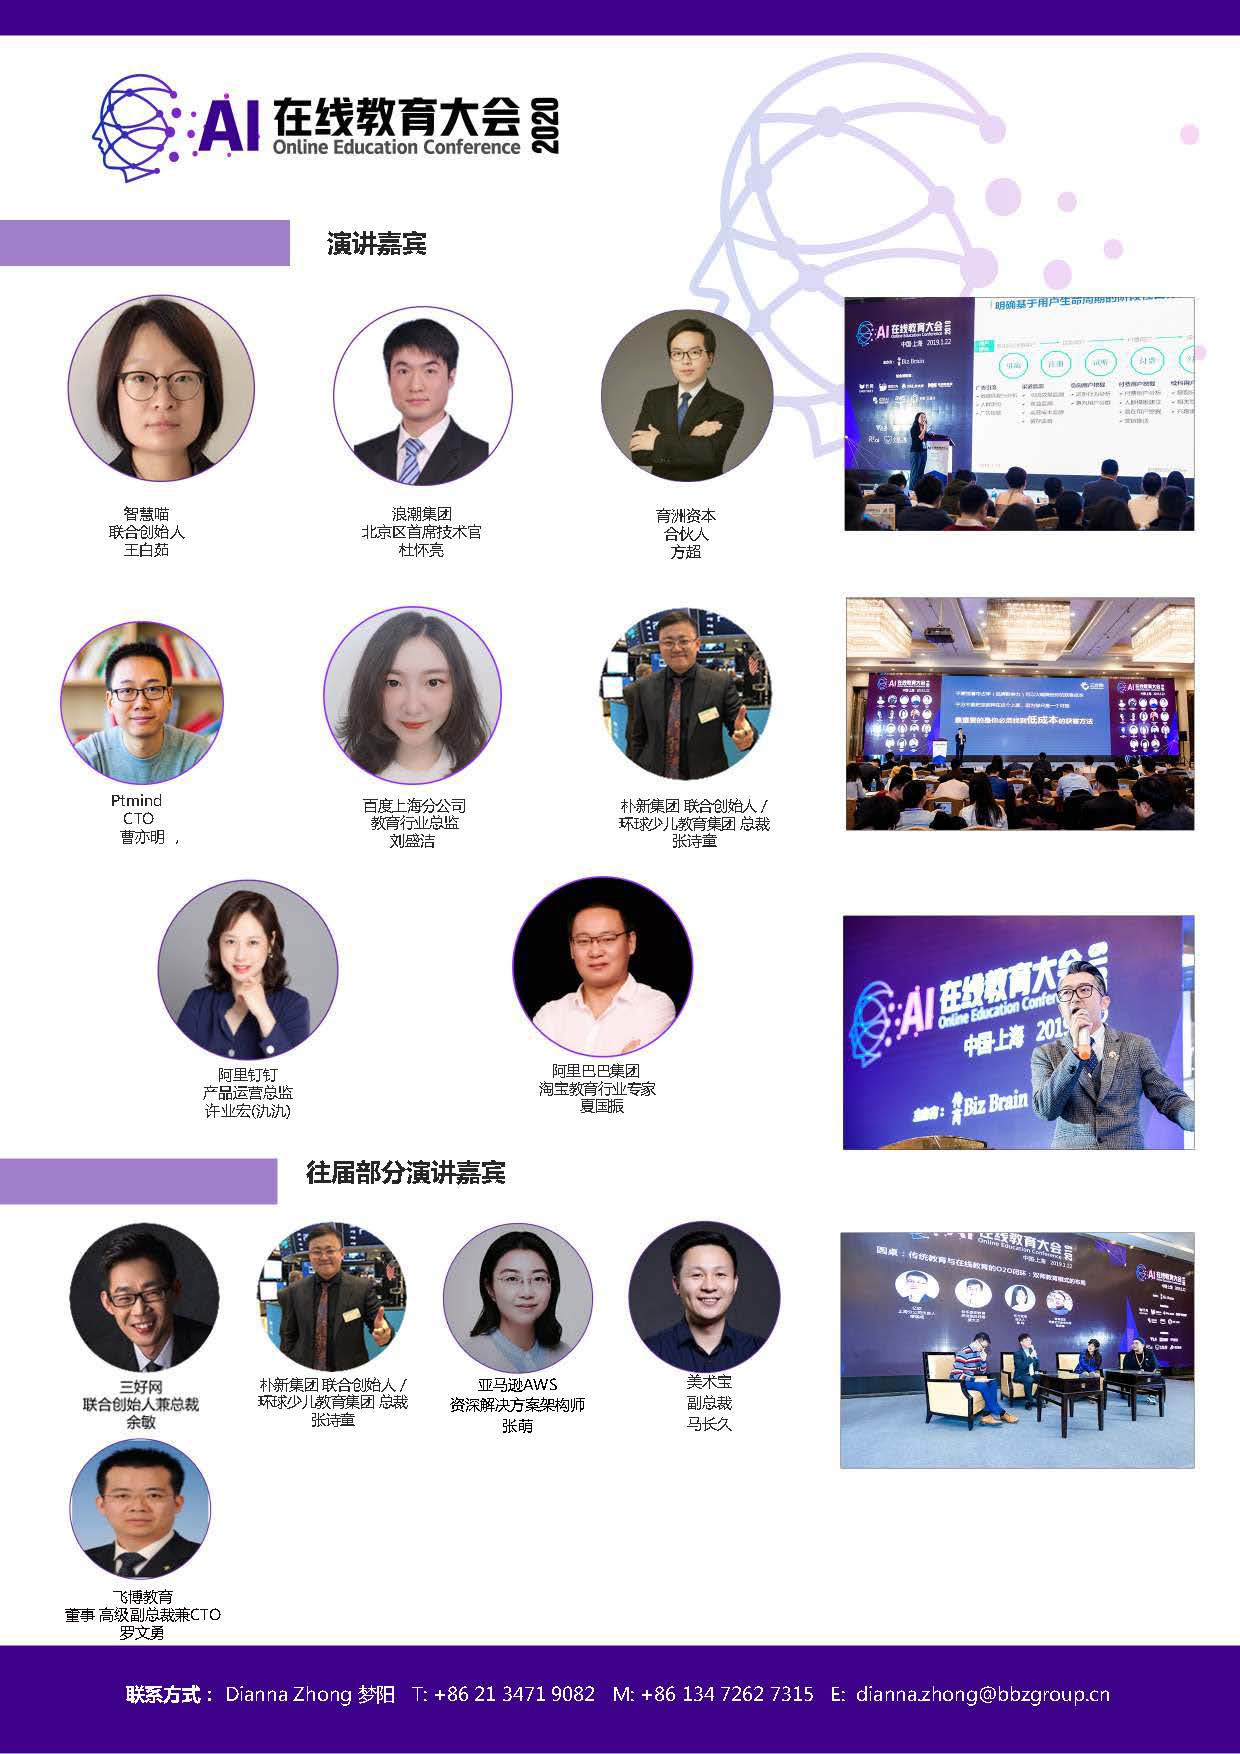 AI在线教育大会 上海 2020.06.17